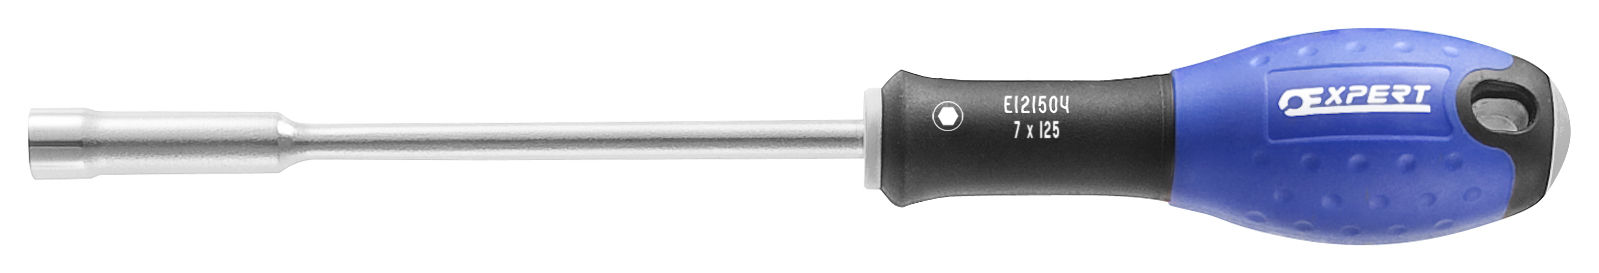 1.E121504 Dopsleutel met handvat - metrisch - 7 mm